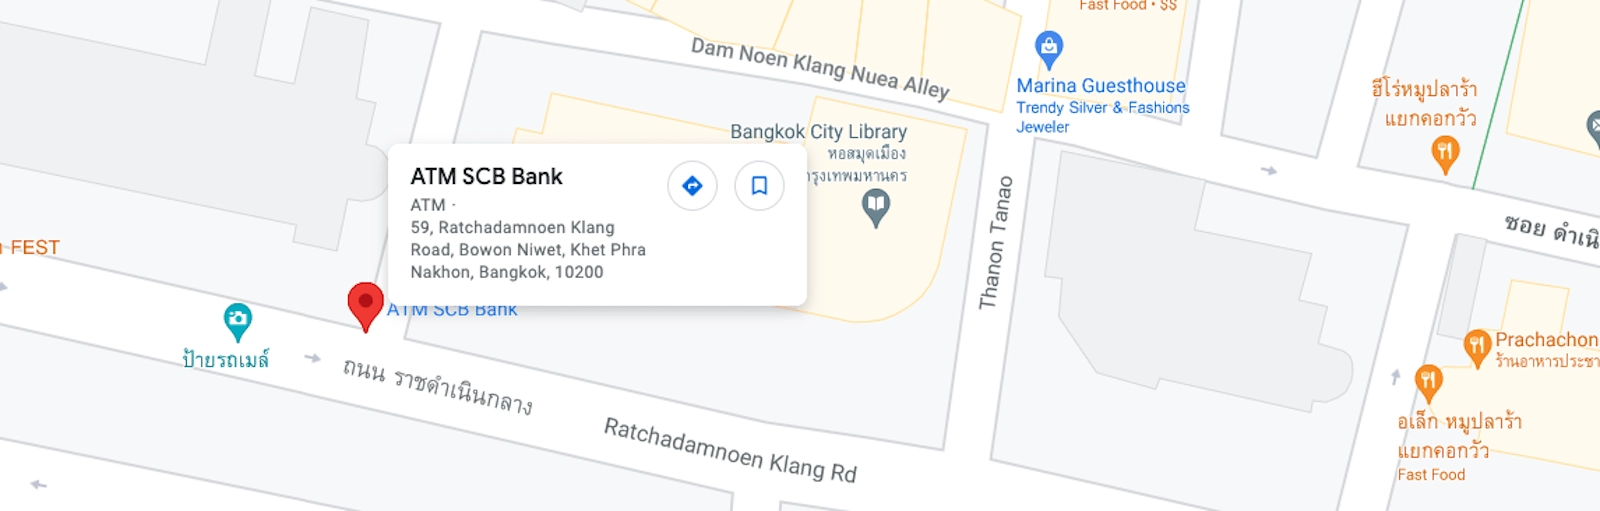 How To Read Thai Street Addresses?